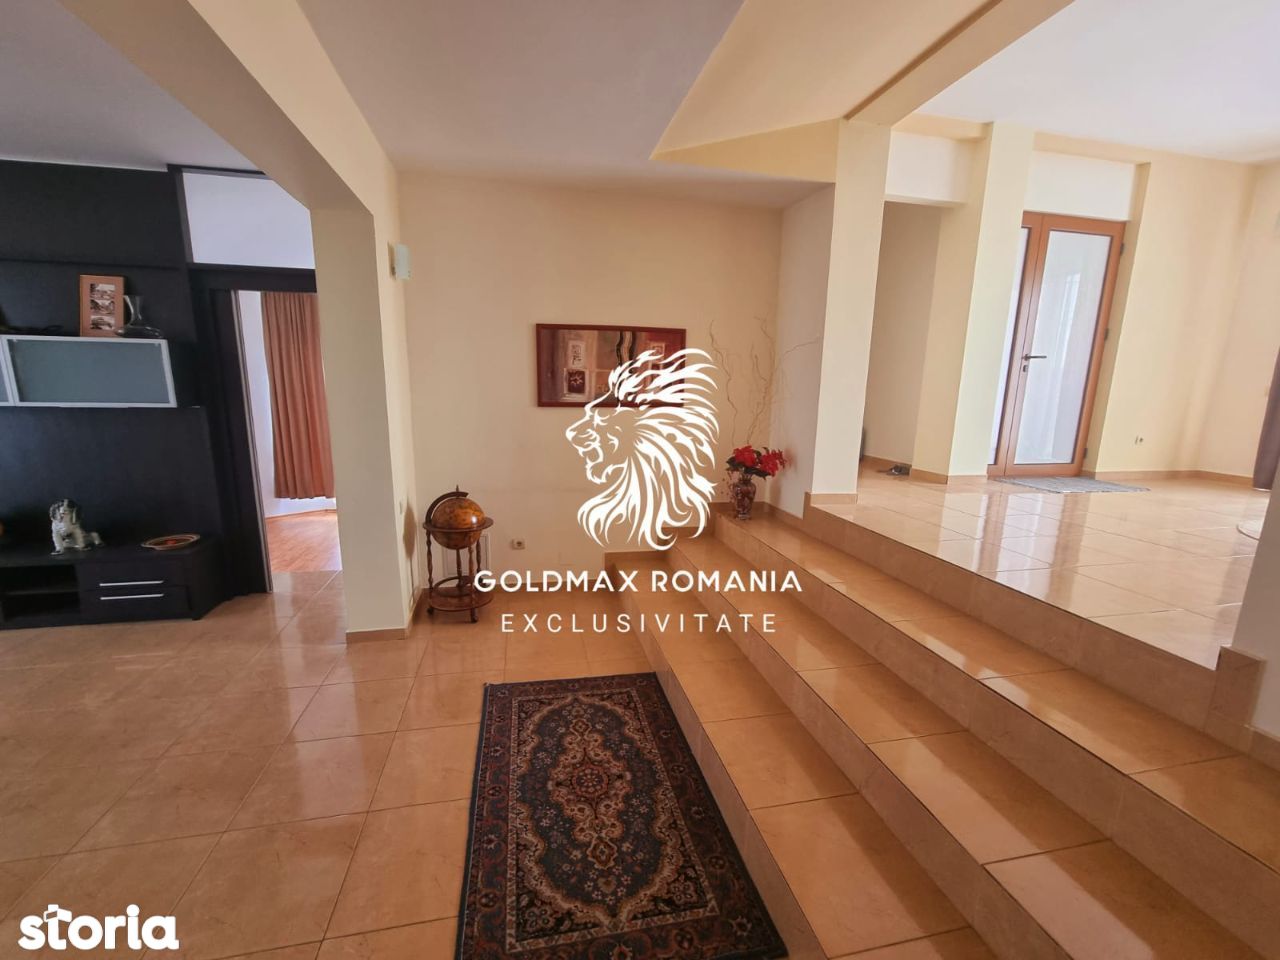 Apartament 3 camere in vila | Exclusivitate | goldmax.ro